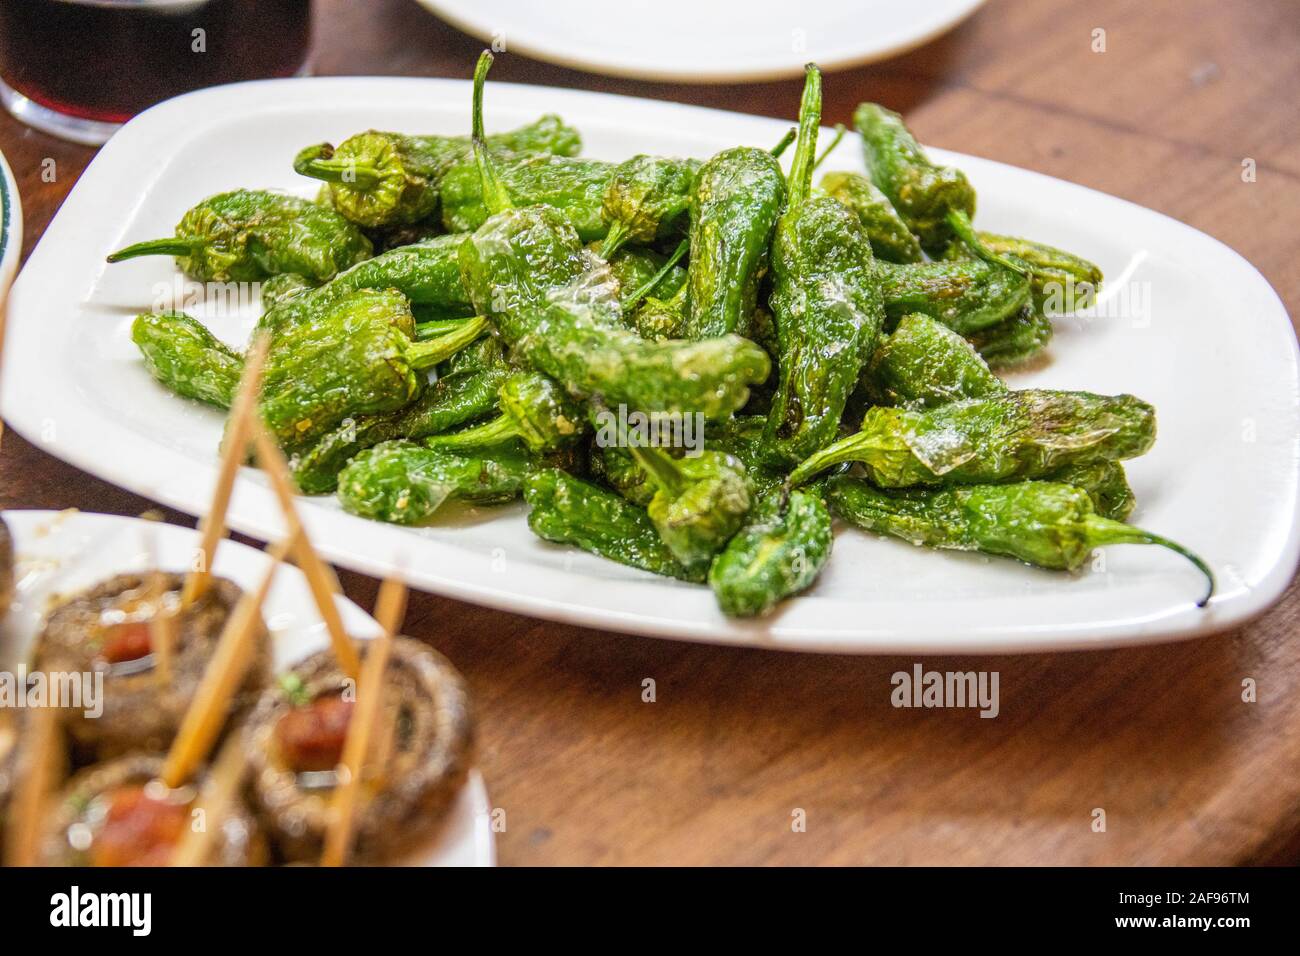 Fried green chilis, Meson Del Champinon, House of Mushrooms, Madrid, Spain Stock Photo